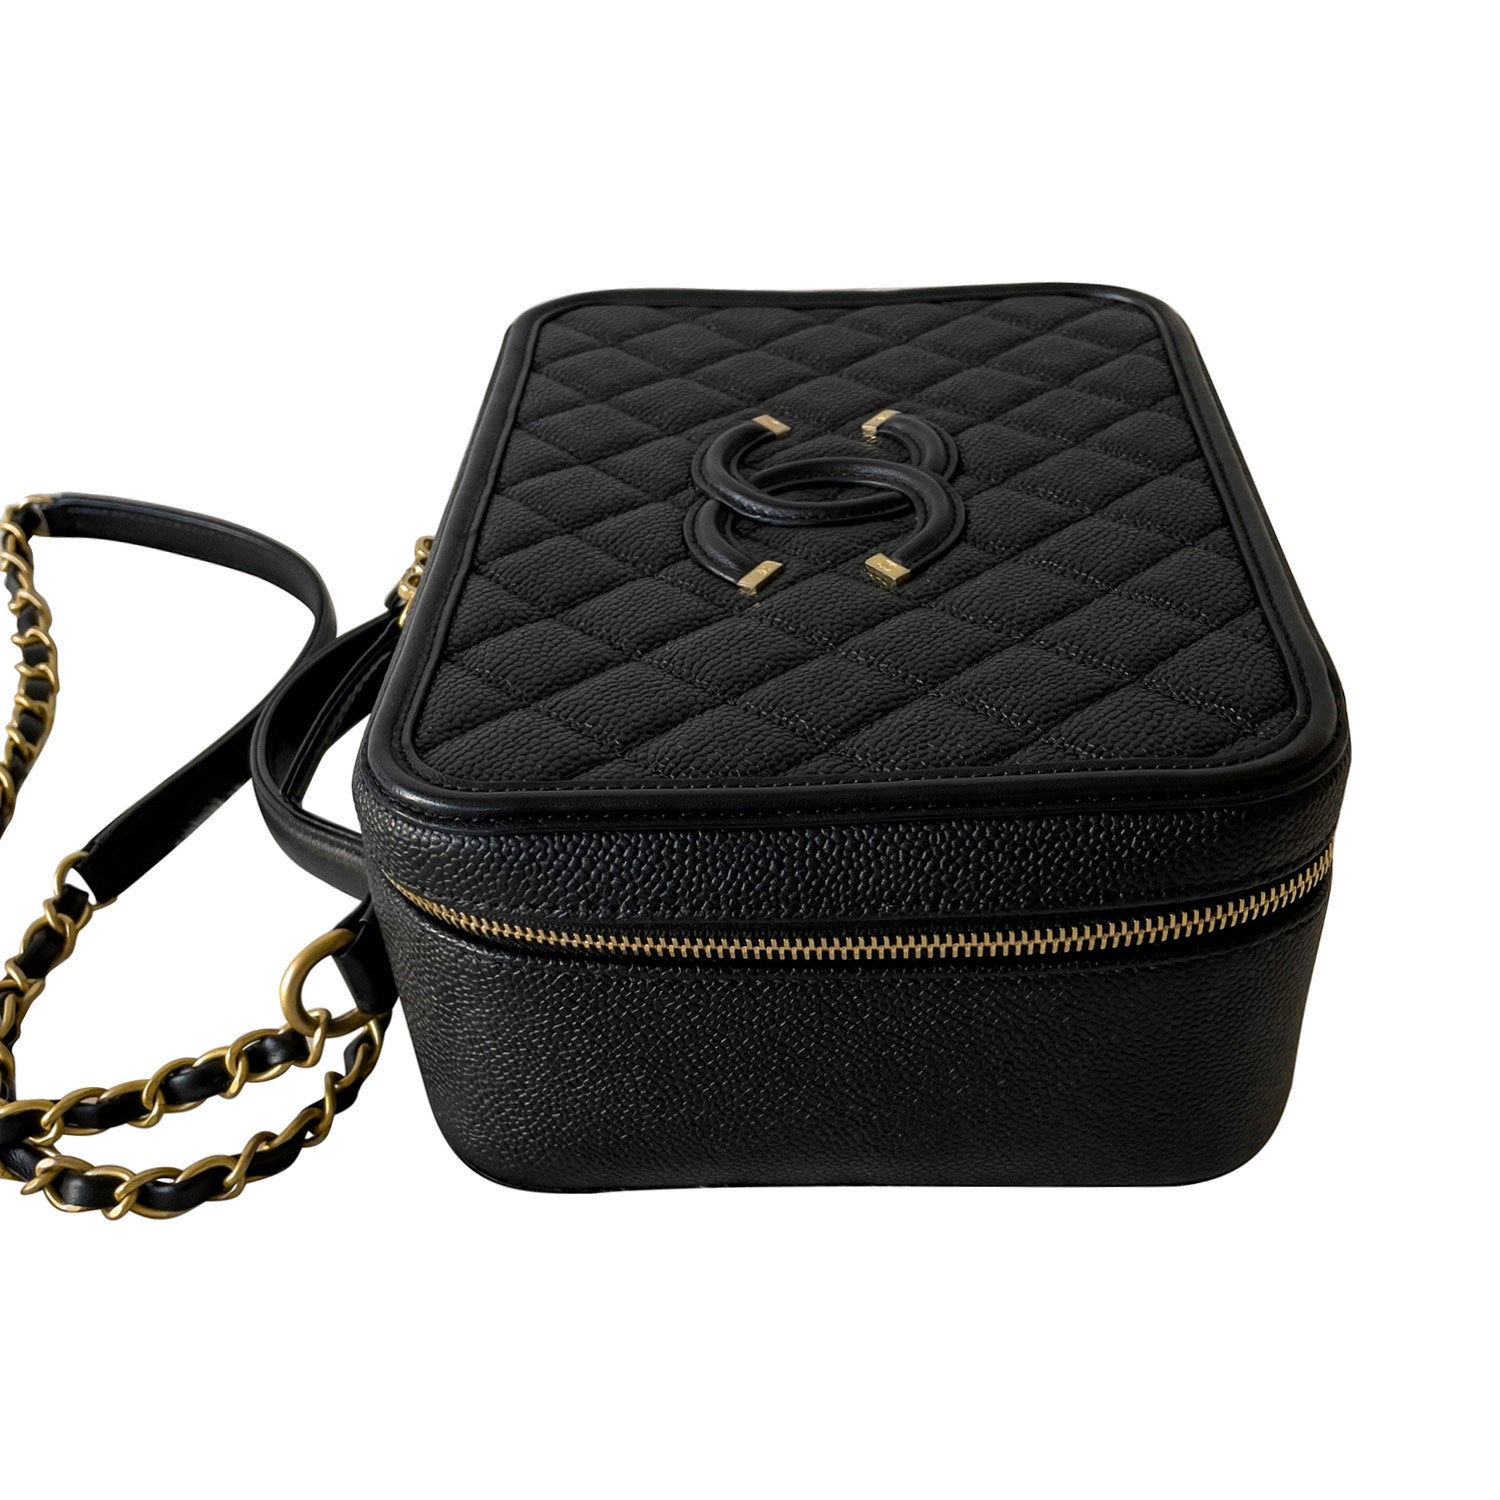 Shop authentic Chanel Medium Filigree Vanity Case at revogue for just ...